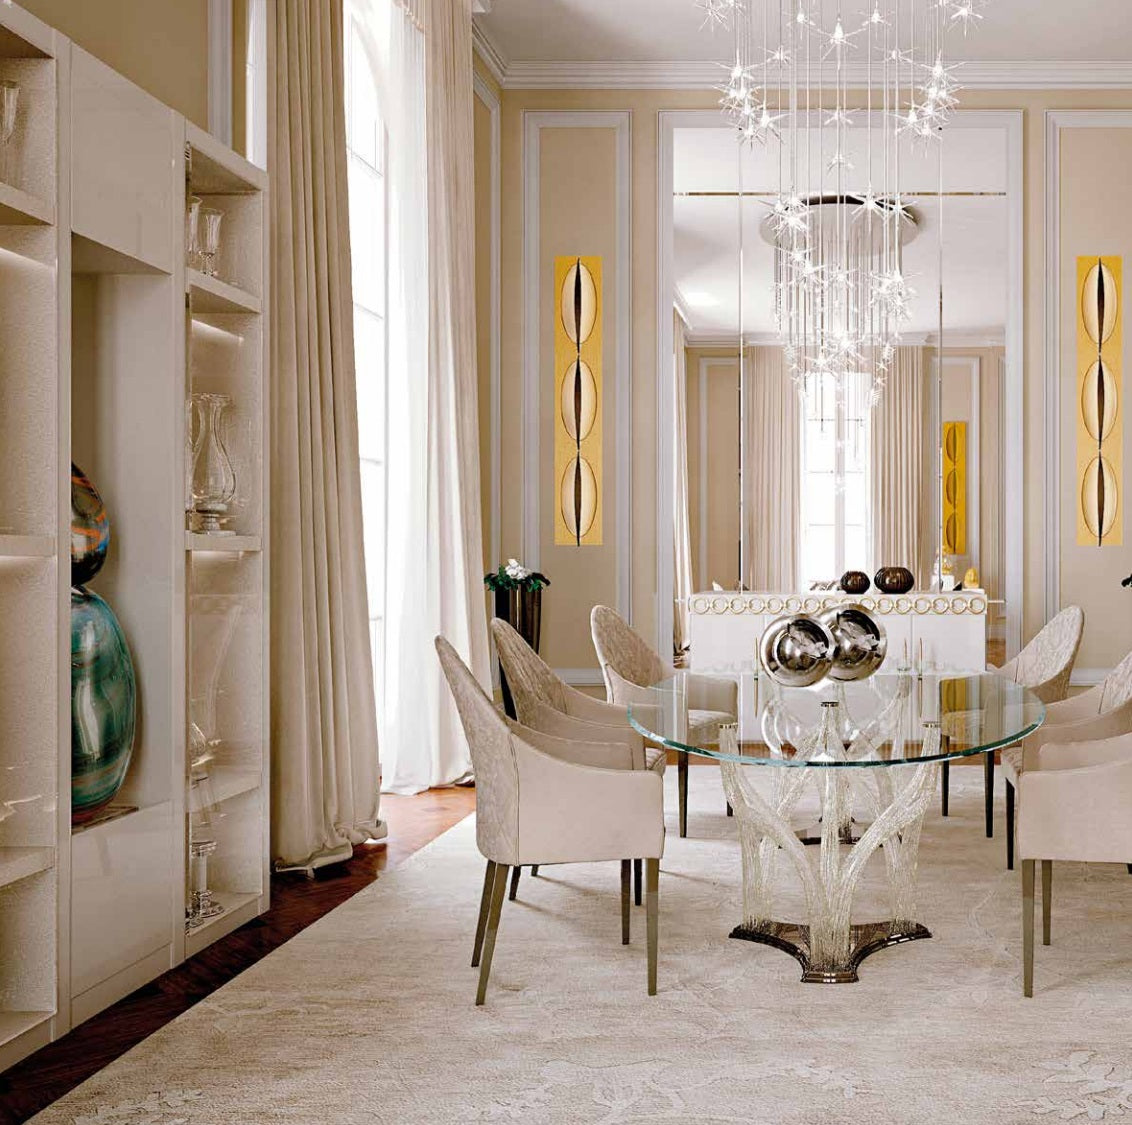 Upscale Italian dining room full of luxury furniture